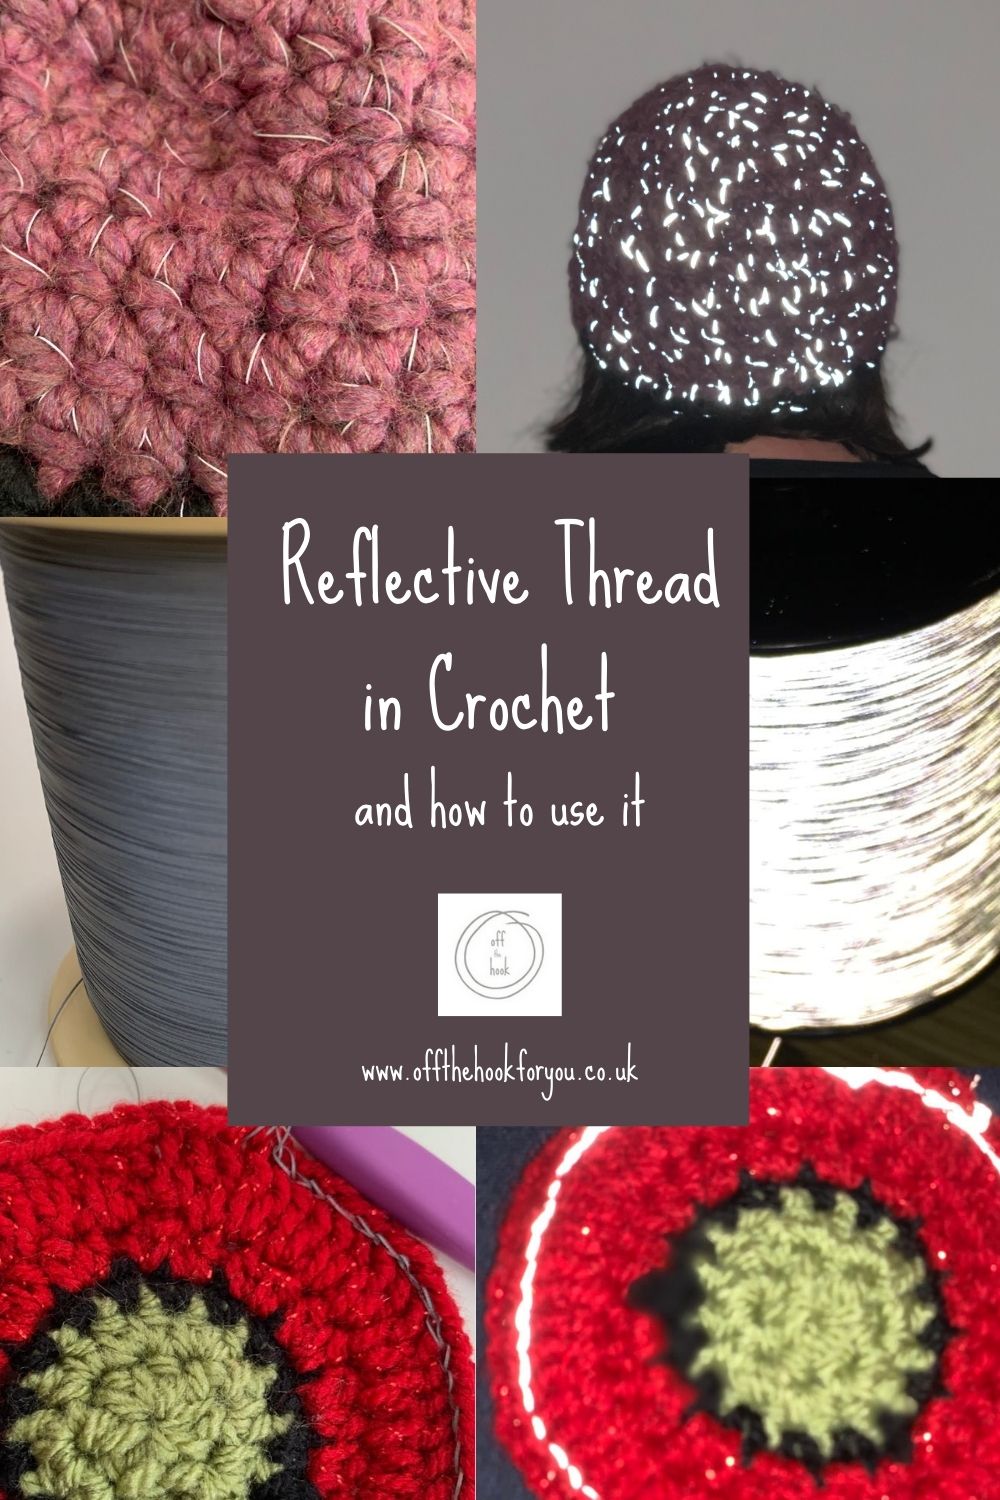 Reflective yarn in crochet UK